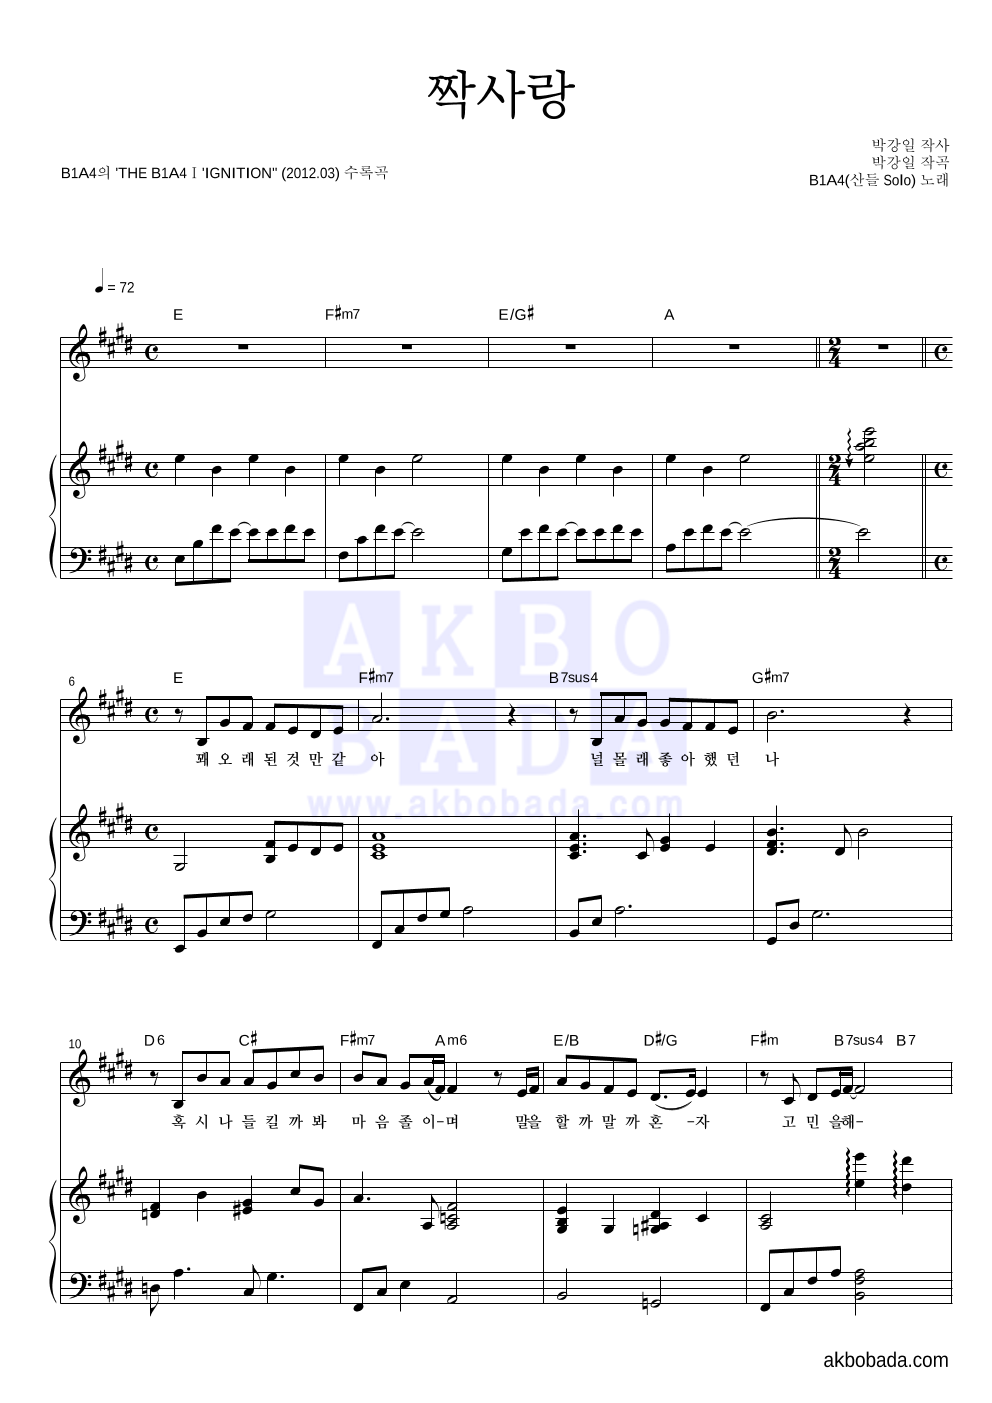 B1A4 - 짝사랑 (산들 Solo) 피아노 3단 악보 